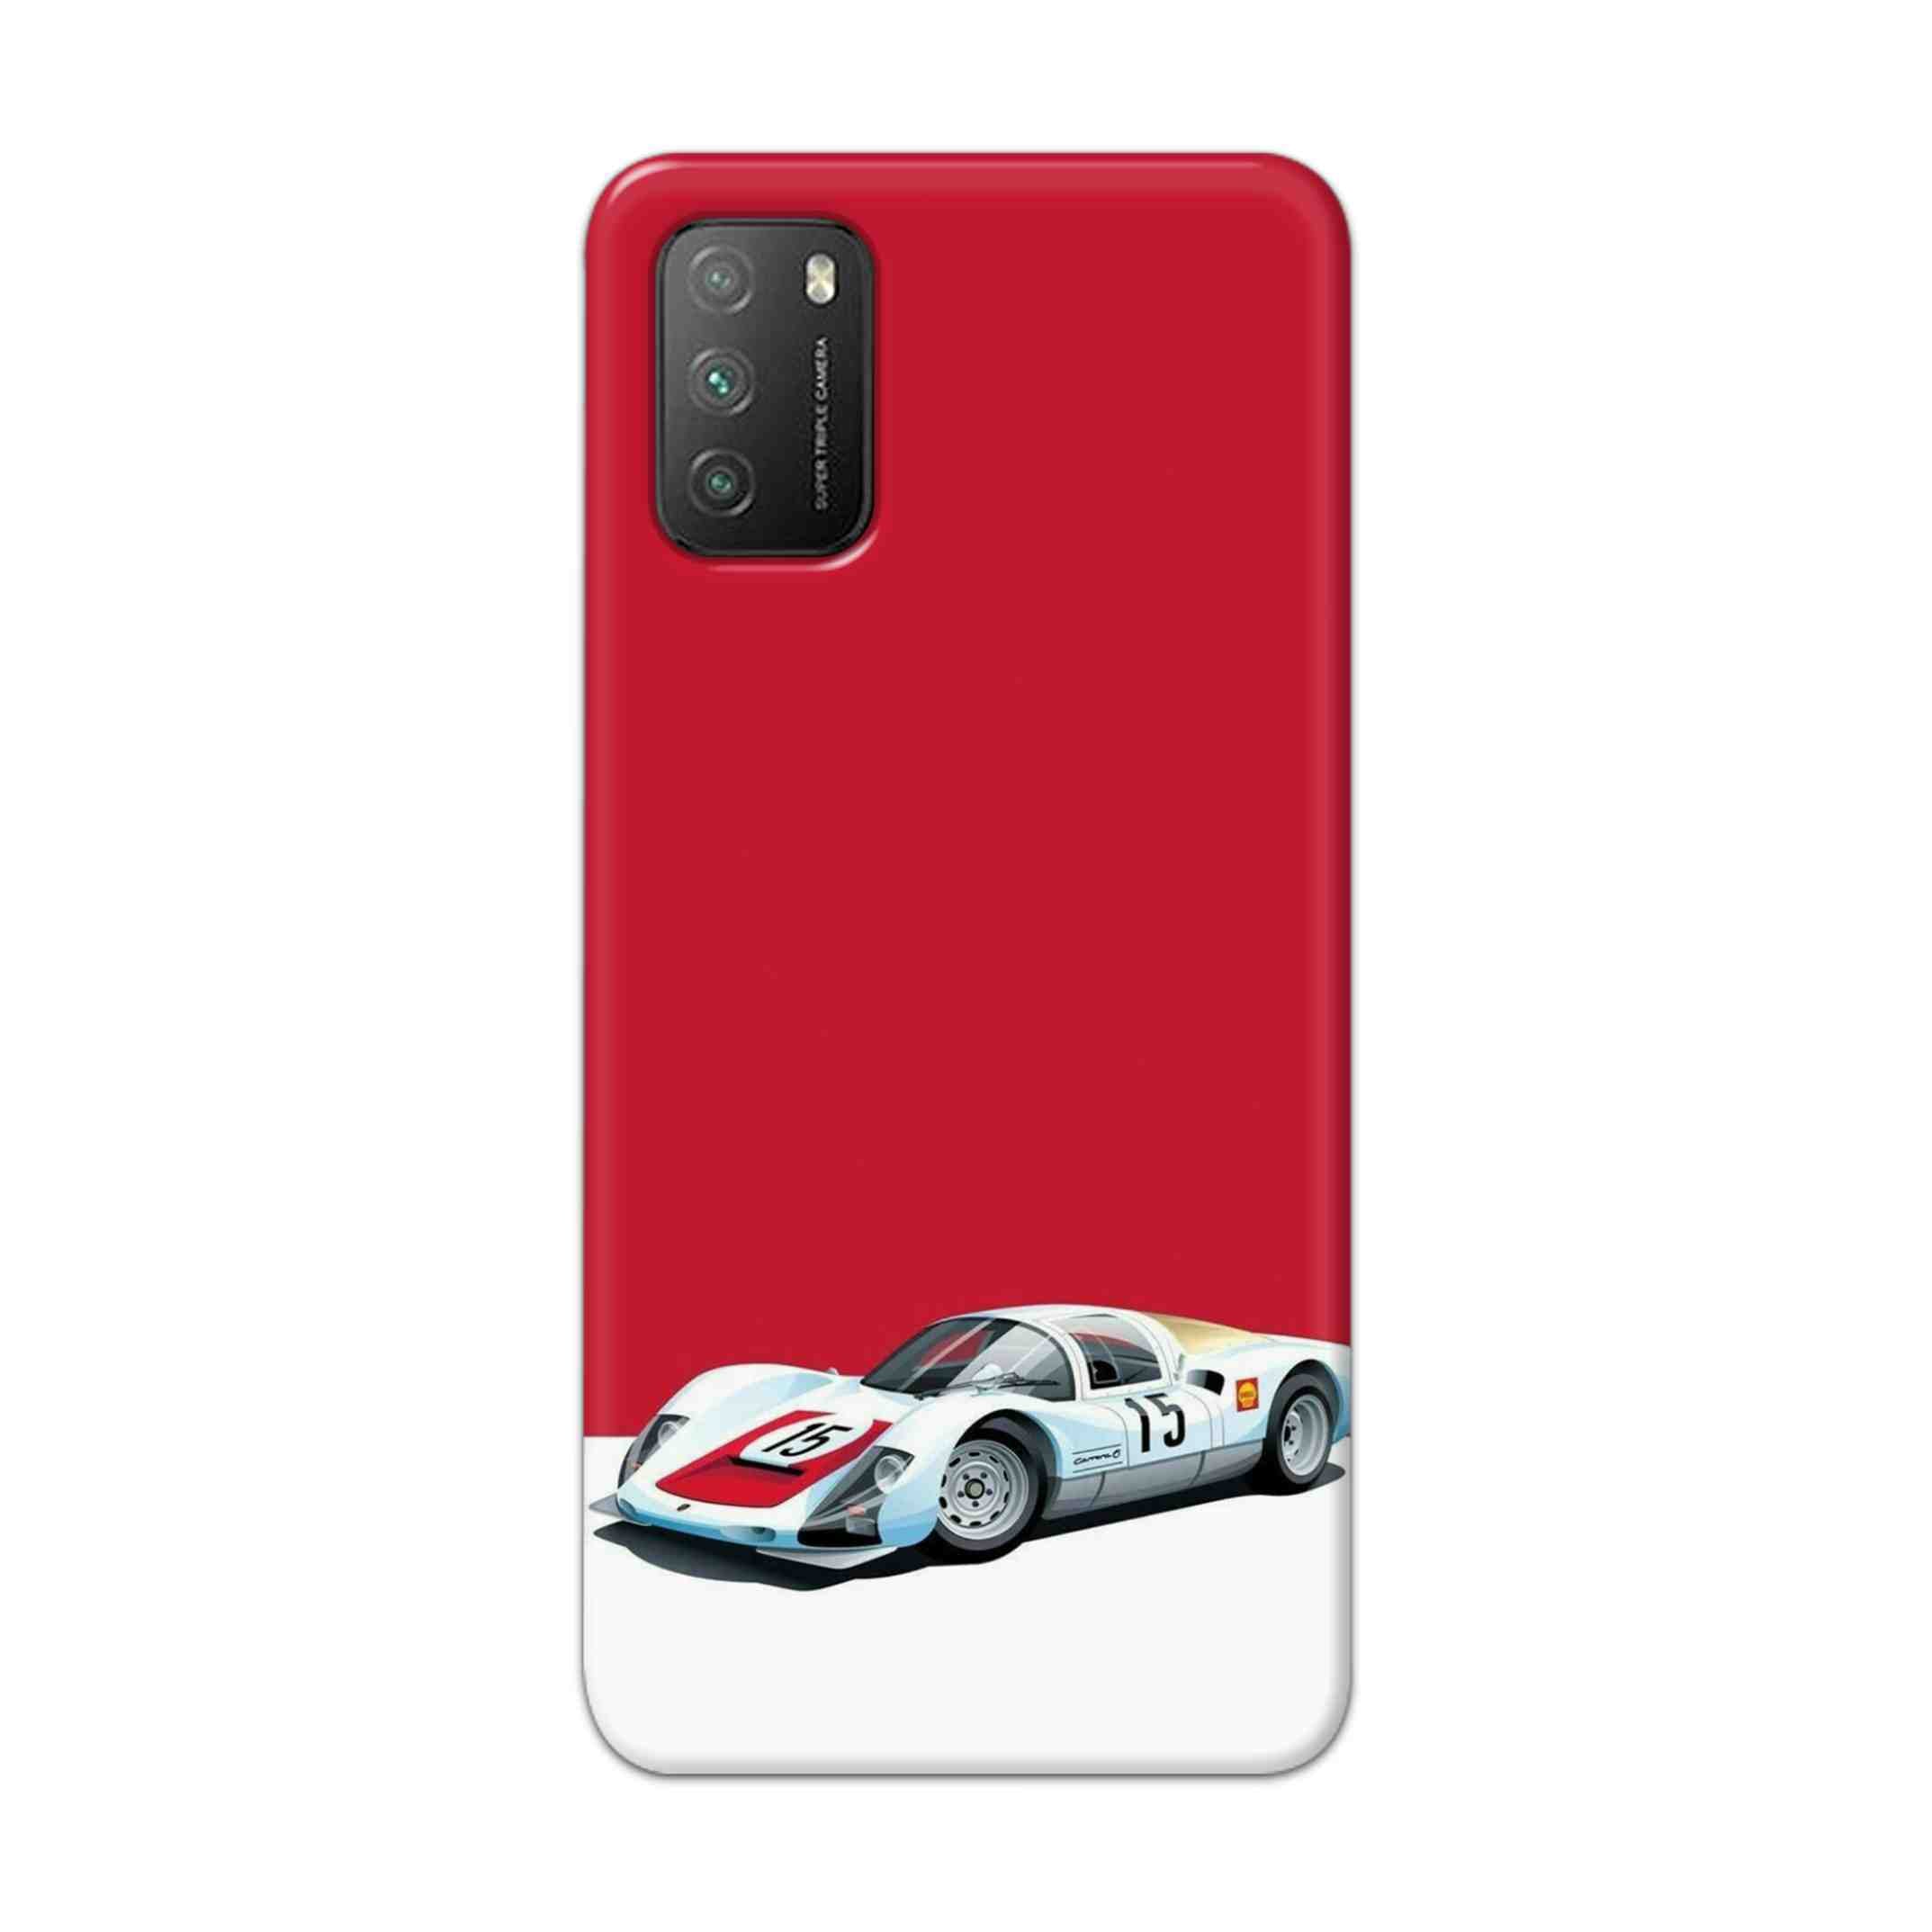 Buy Ferrari F15 Hard Back Mobile Phone Case Cover For Poco M3 Online